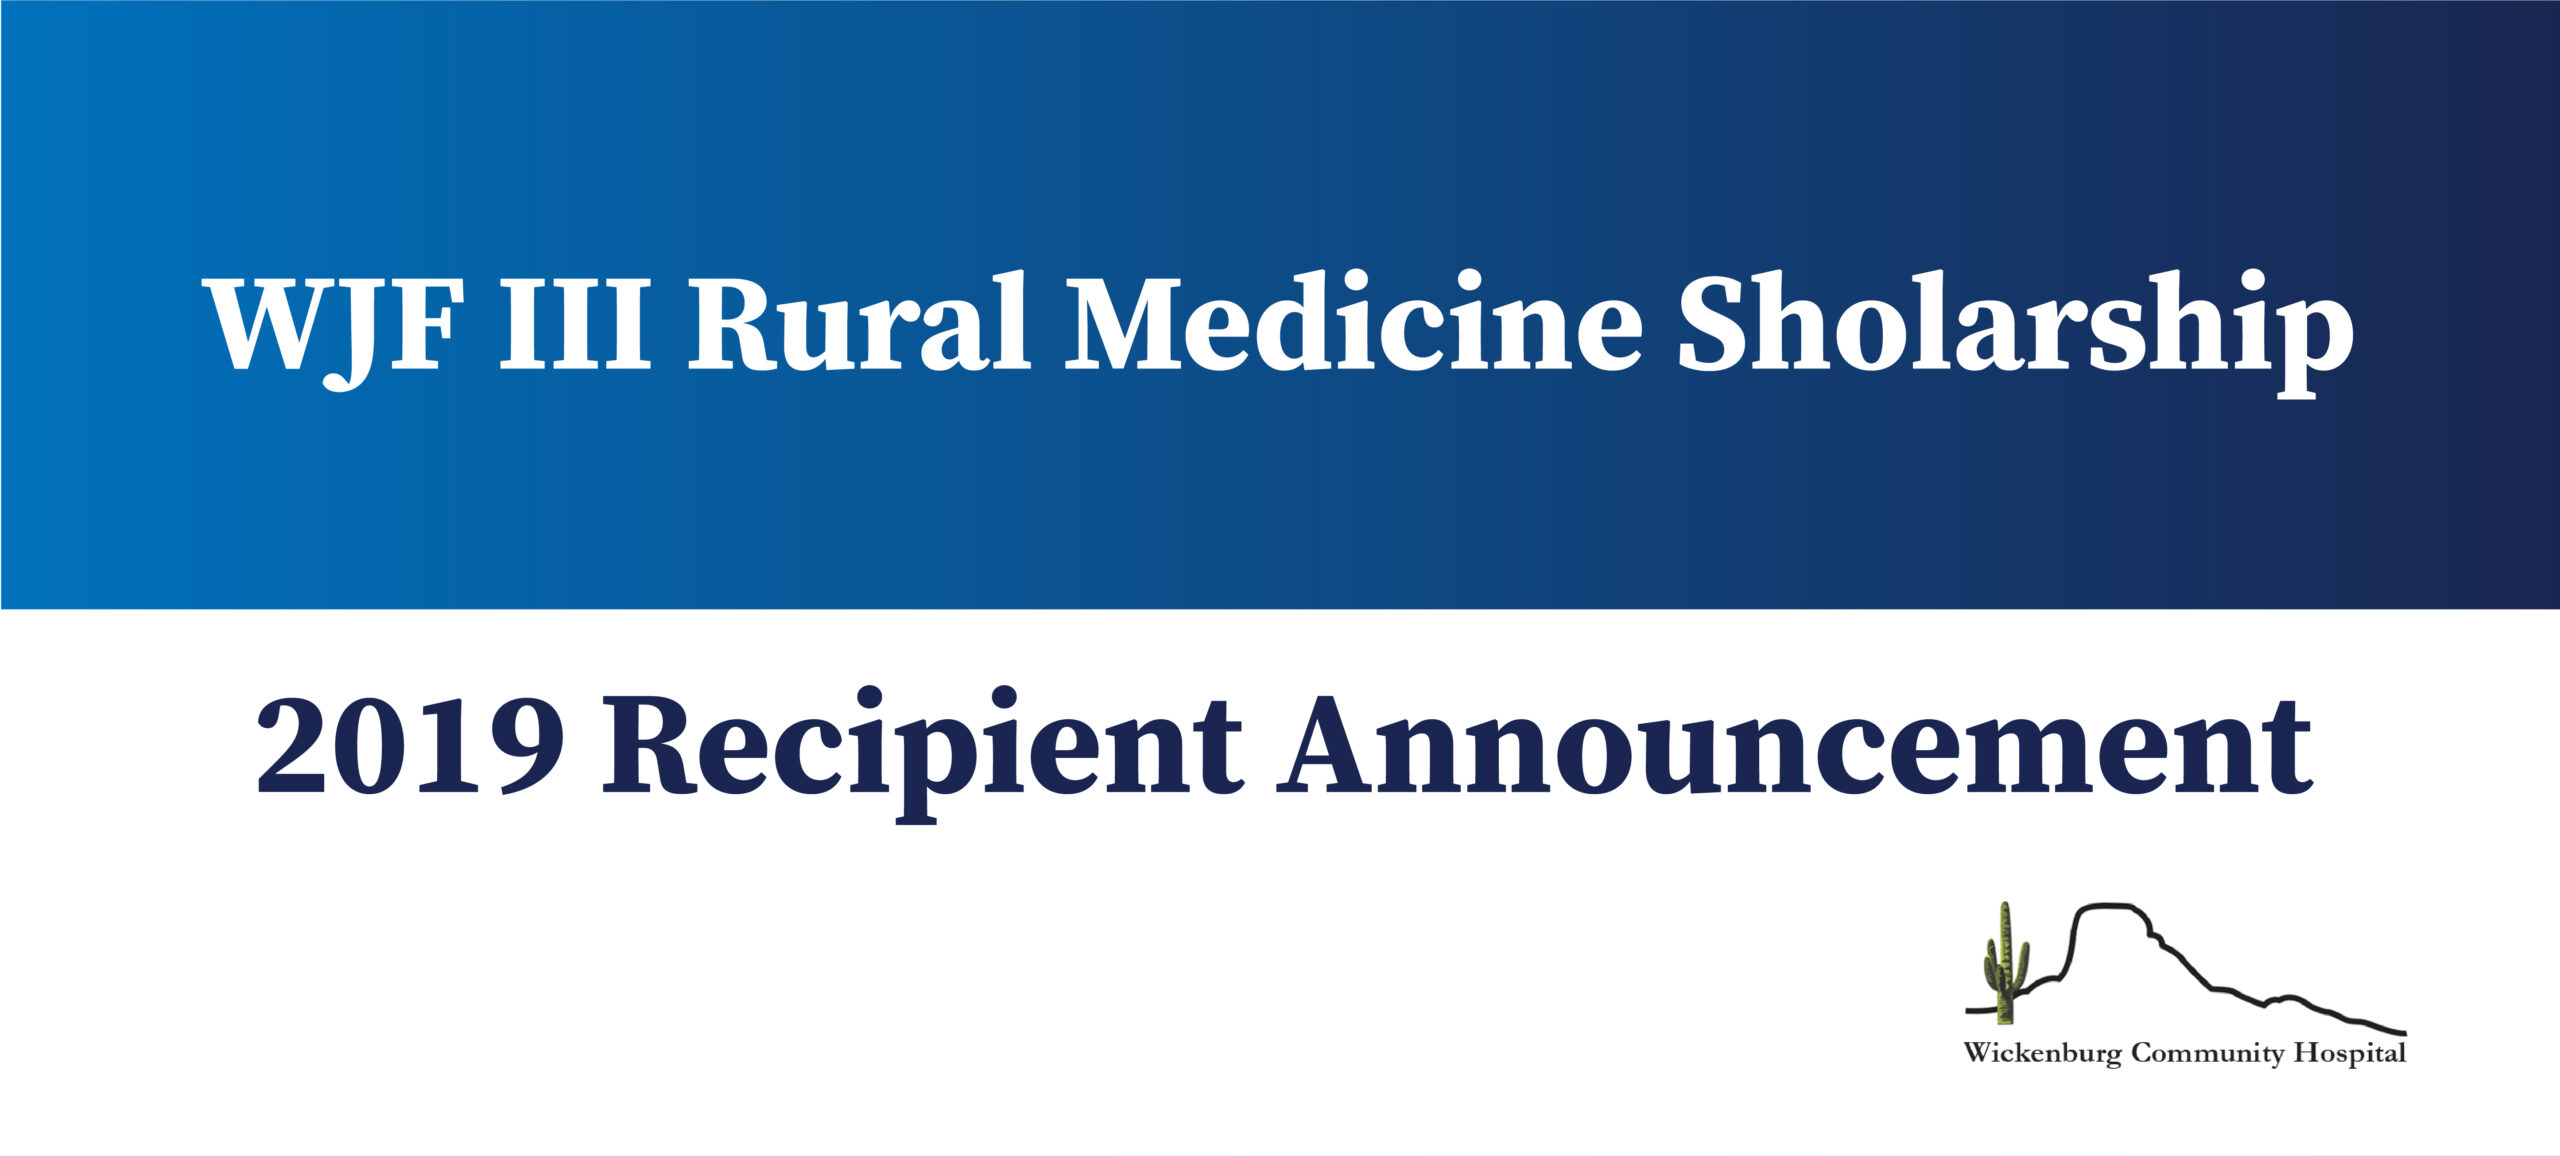 WJF III Rural Medicine Scholarship- 2019 Recipient Announcement post thumbnail image